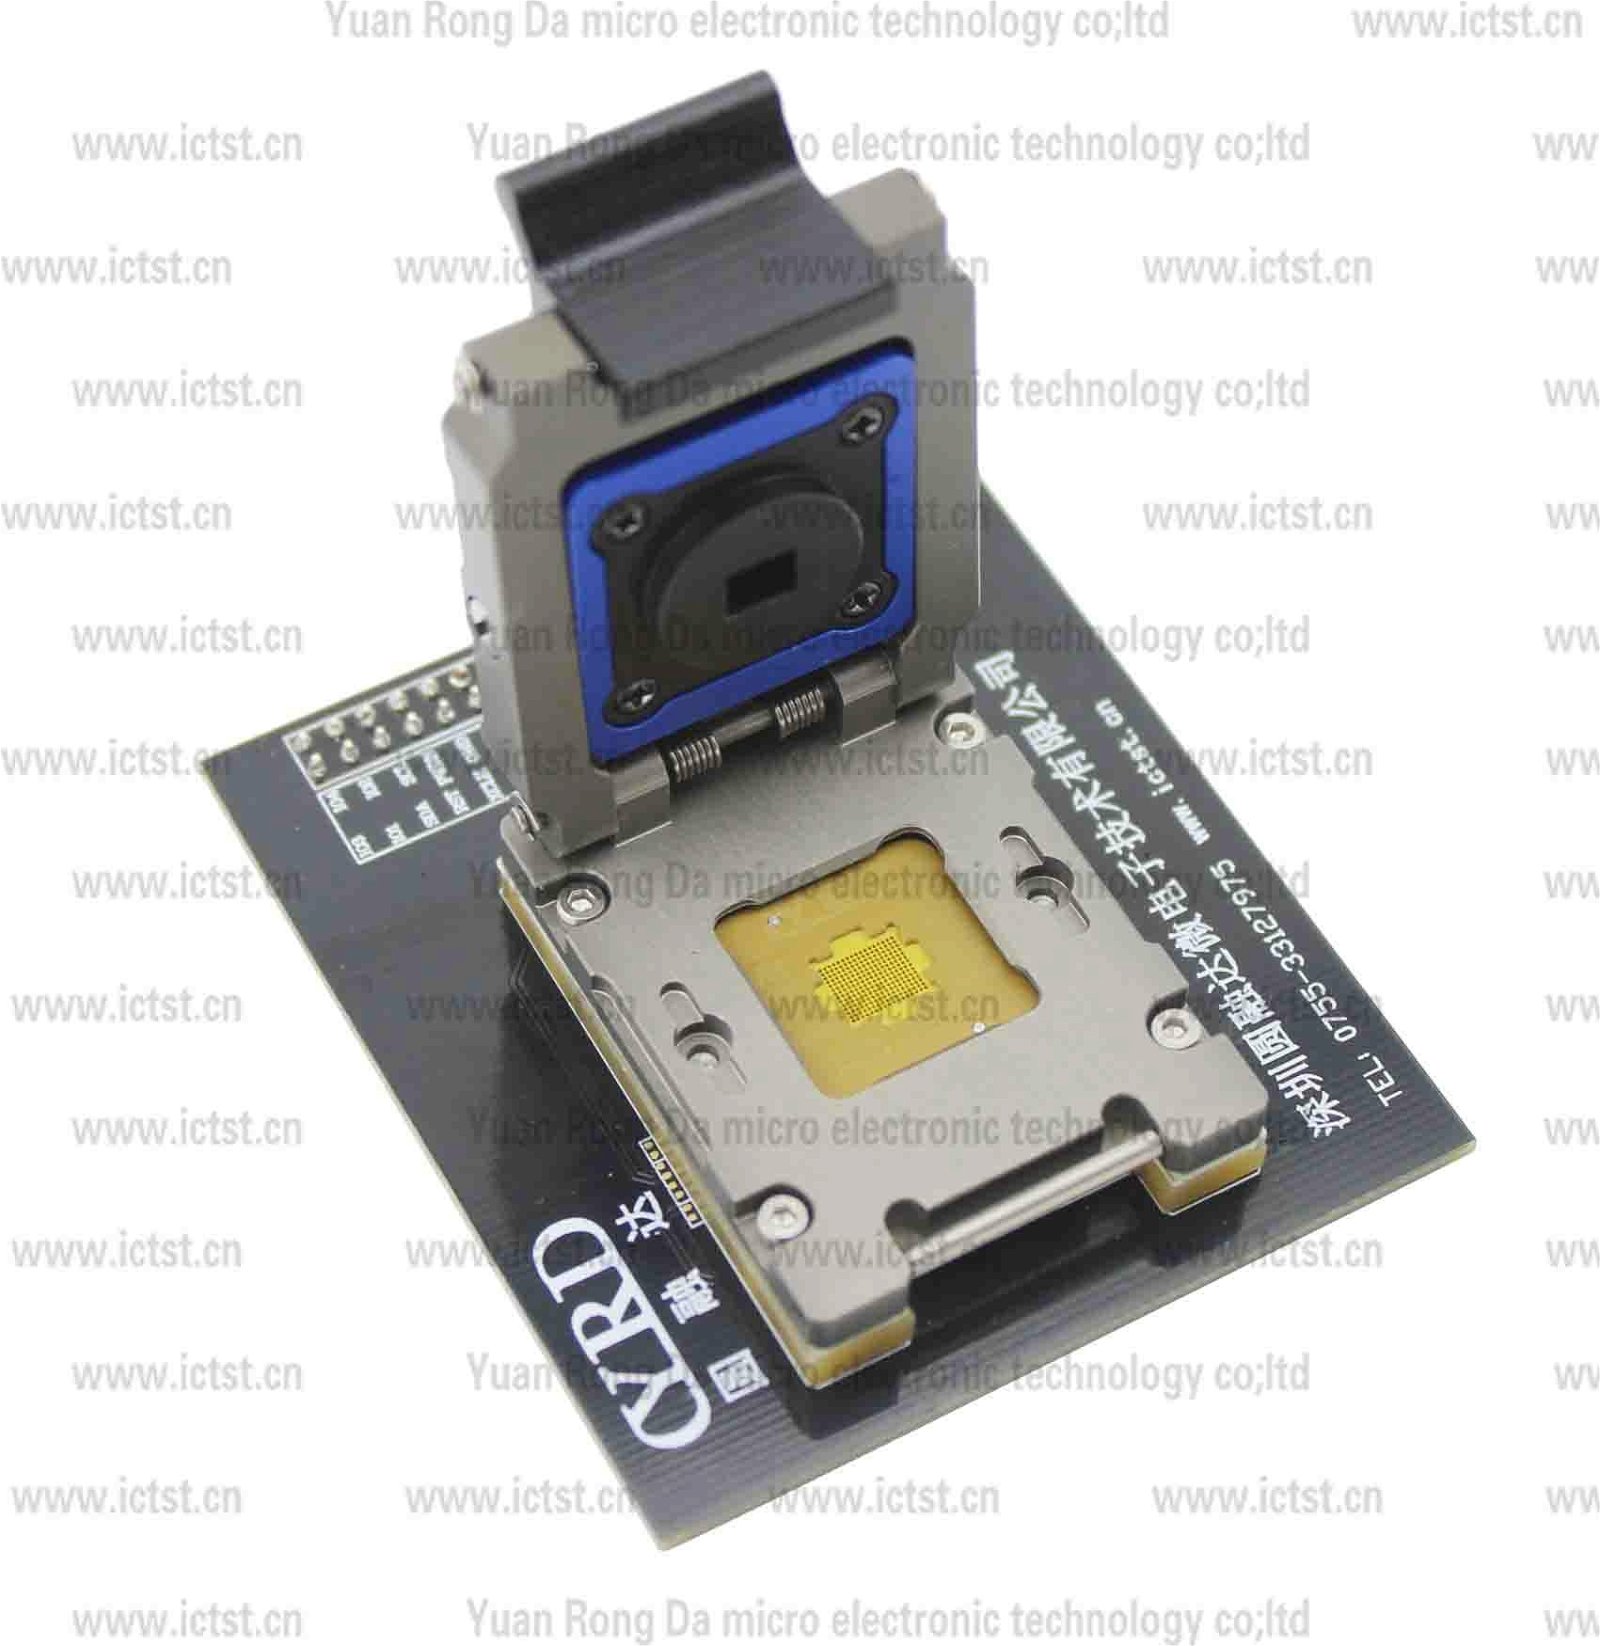 OV13850CSP-V3.0 BGA test socket test fixture camera chip testing solution 3